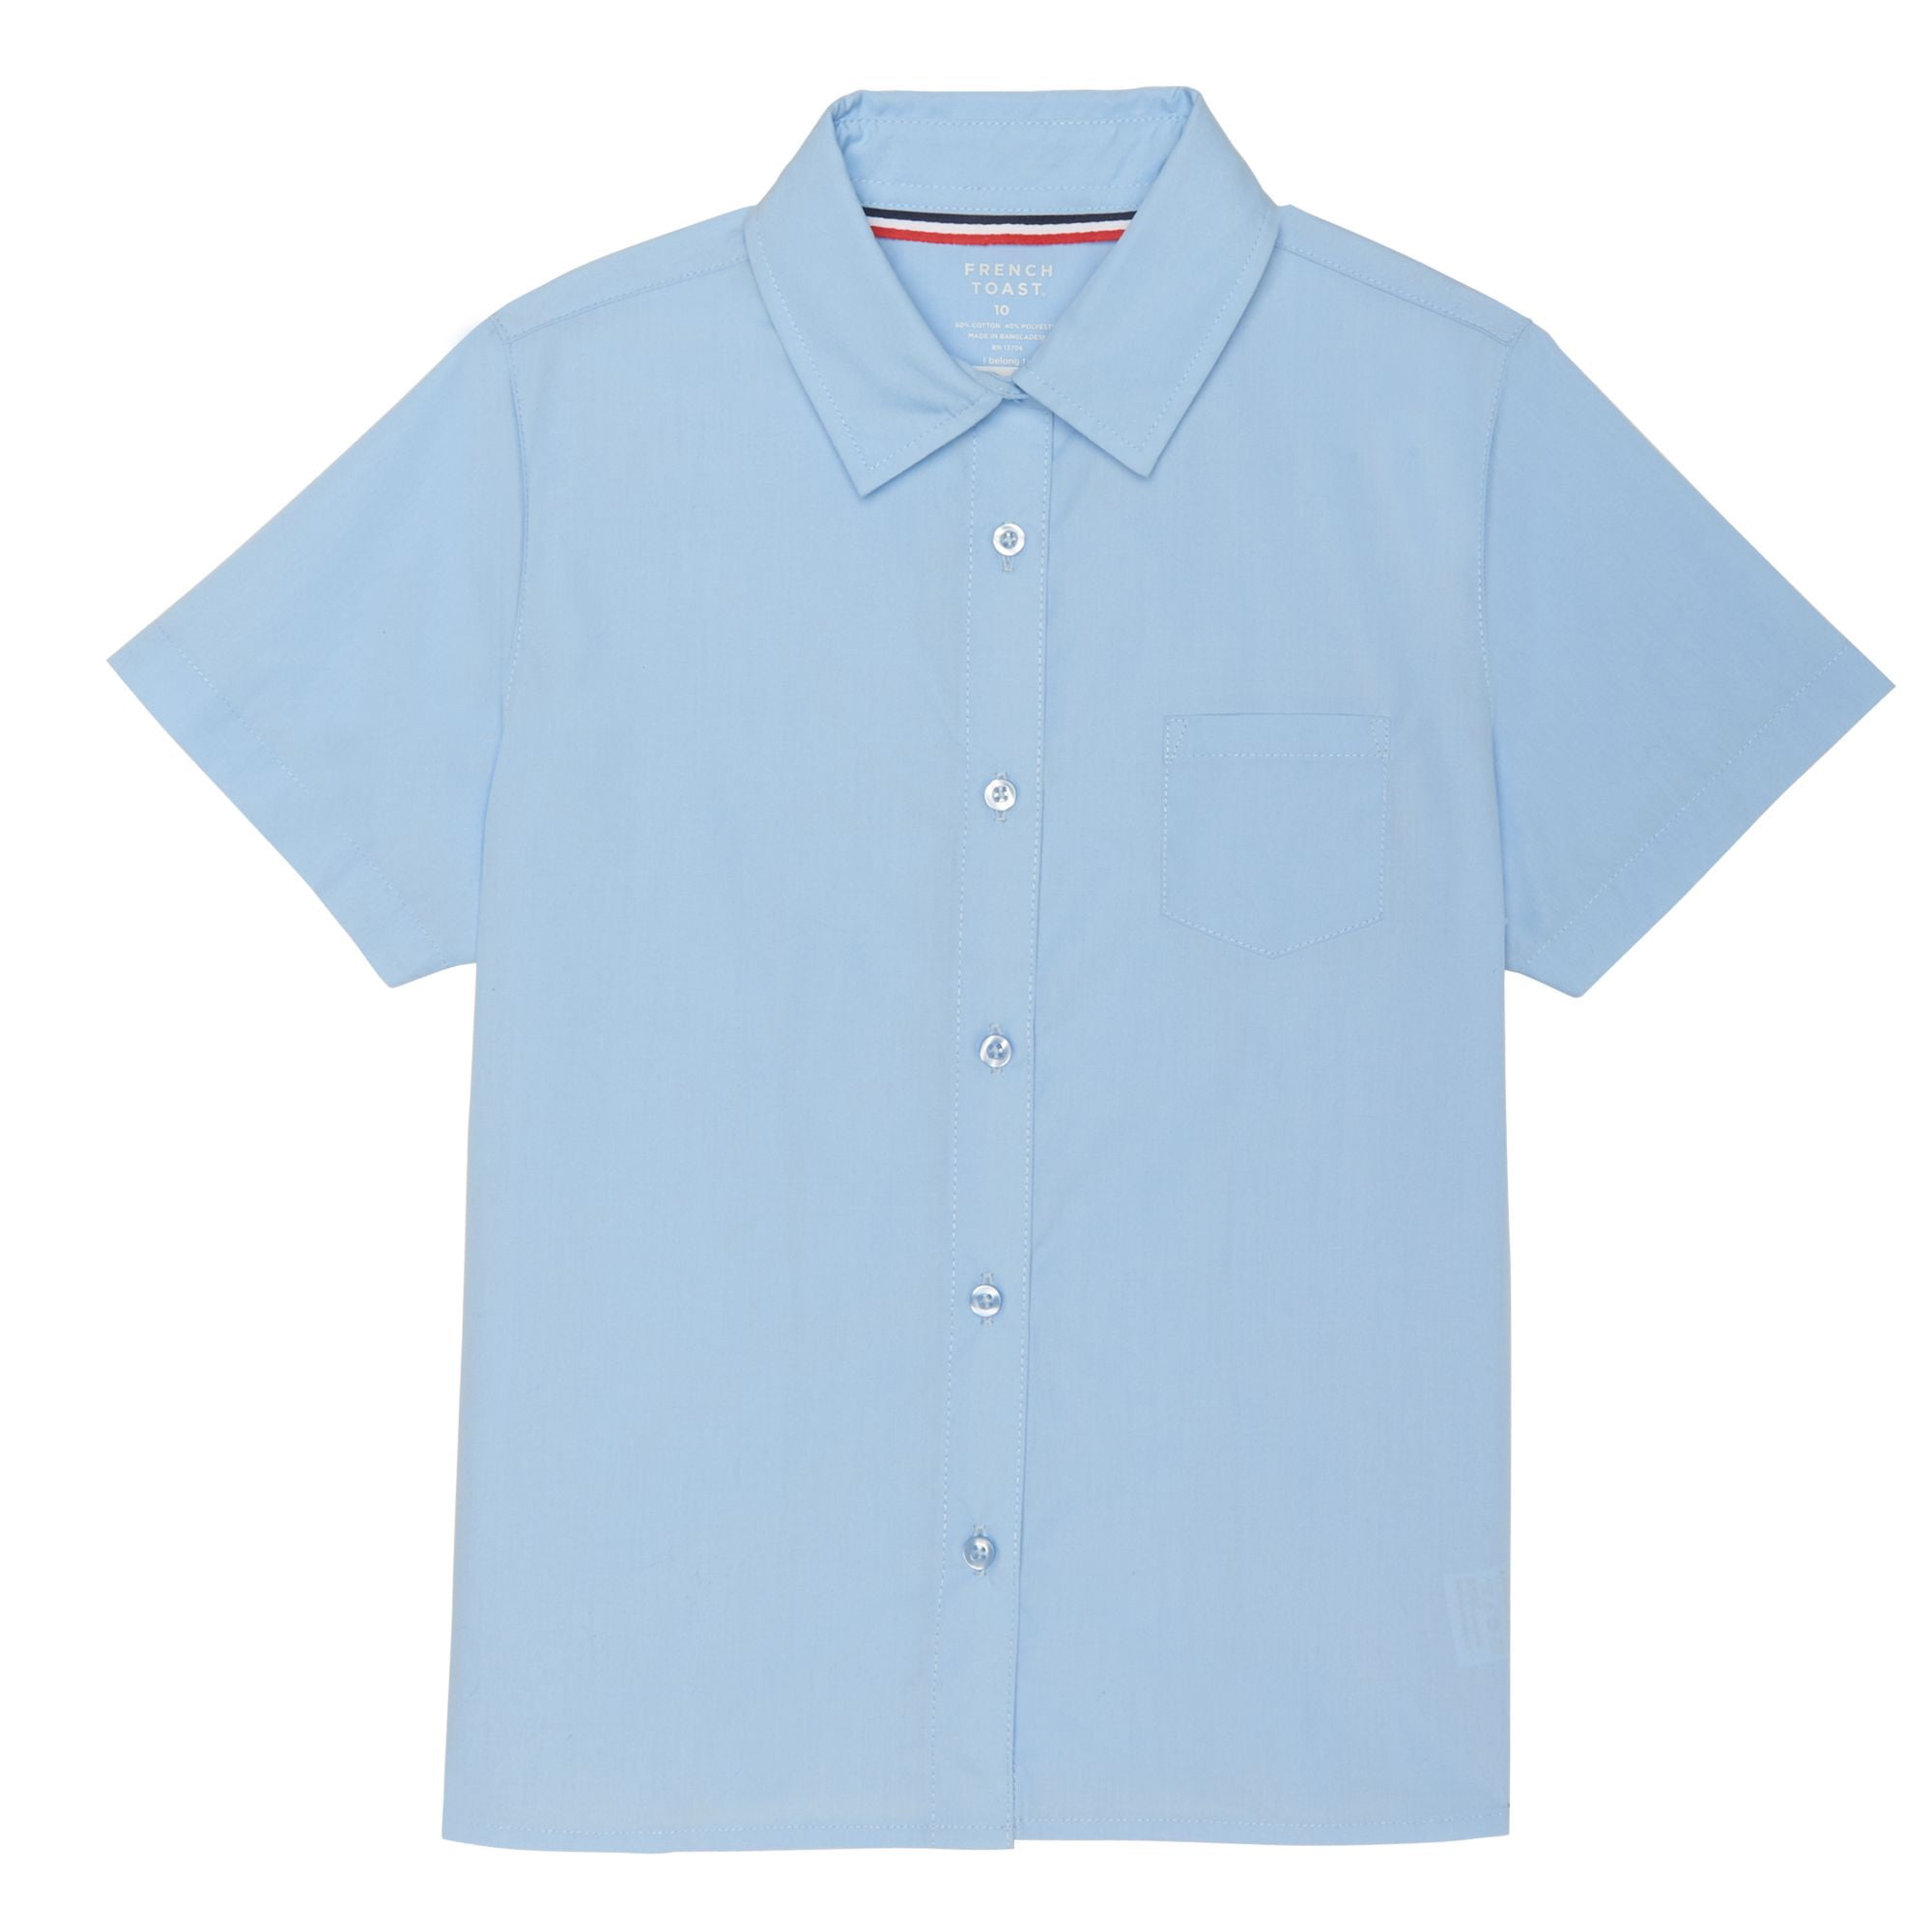 French Toast Baby-Boys Short Sleeve Oxford Shirt School Uniform Polo Shirt